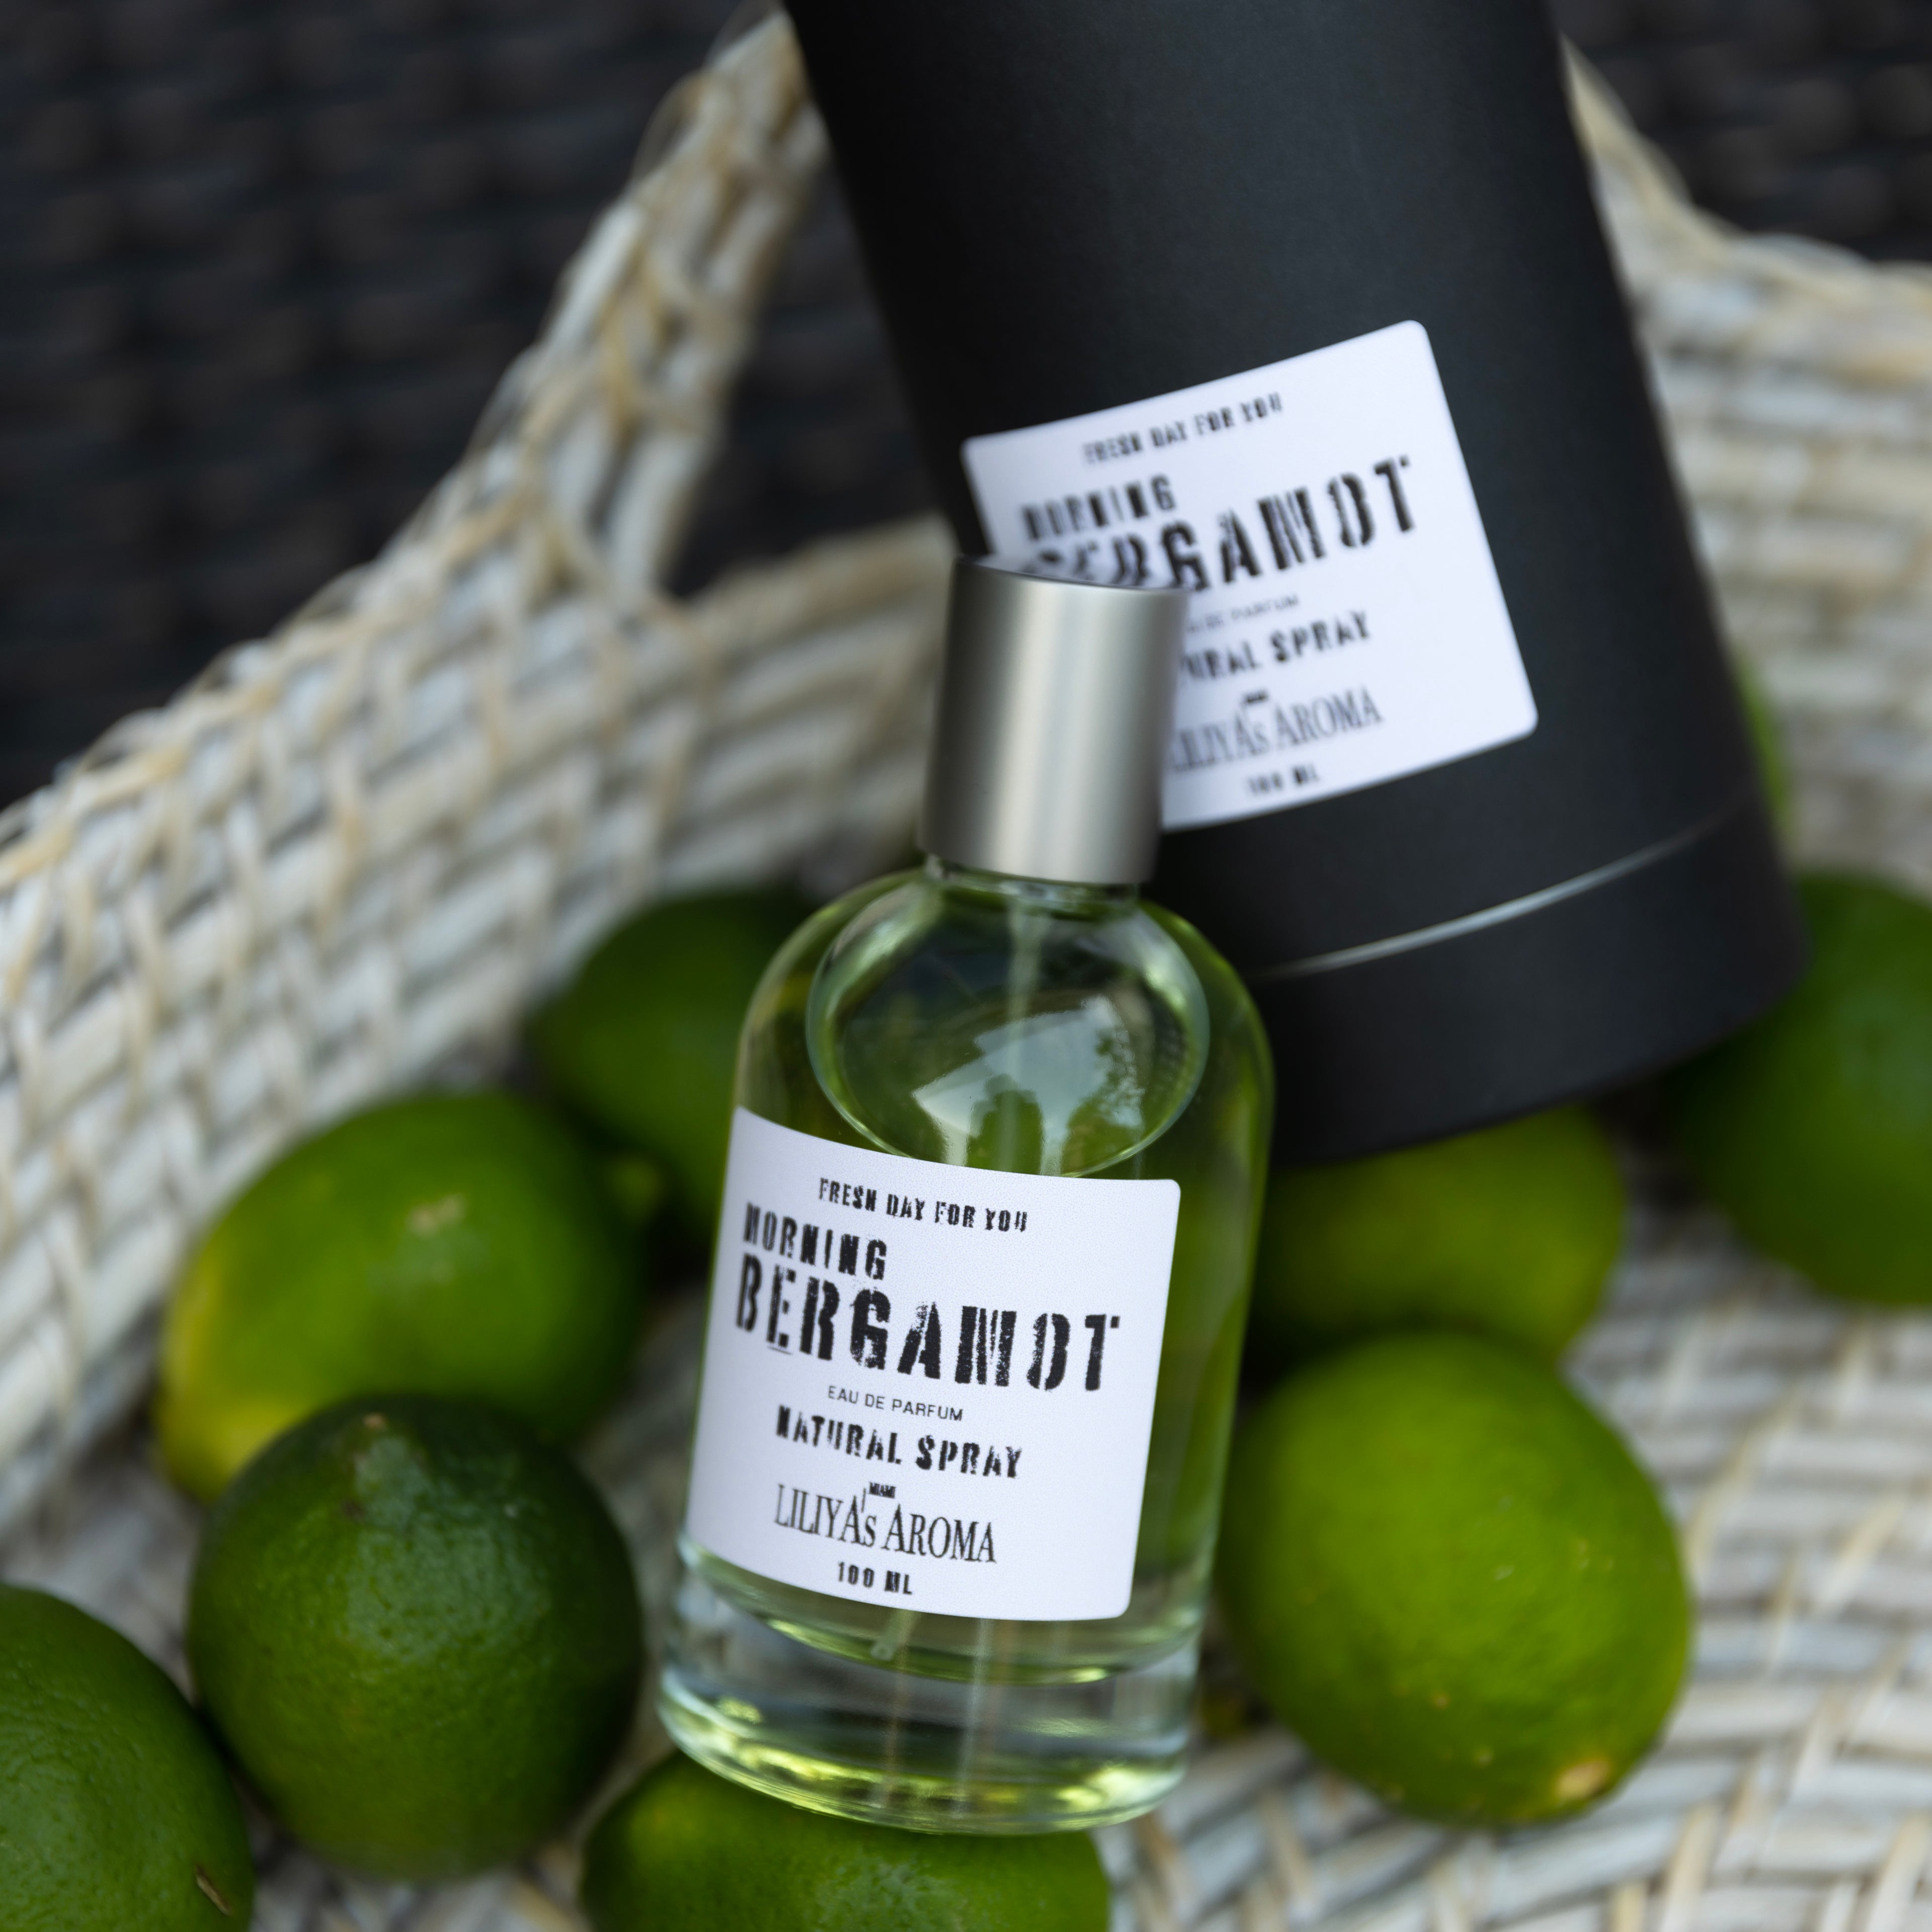 Morning Bergamot Eau De Parfum, for Women and Men, Citrus Fragrance, Scent for Day or Night 3.4 Fl Oz